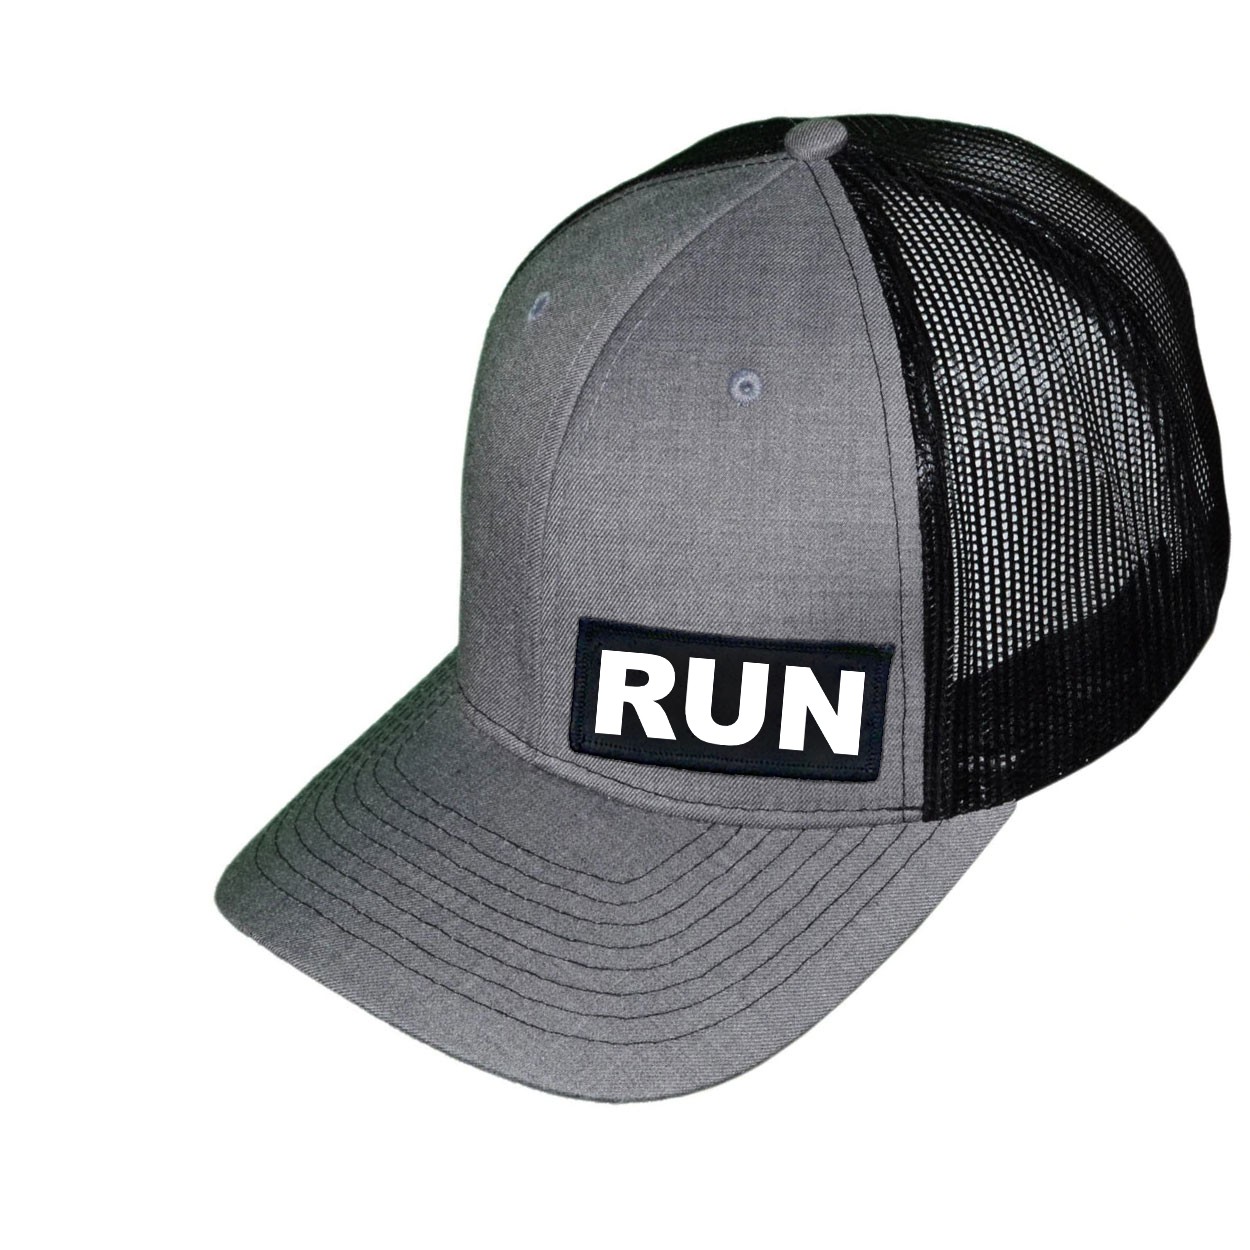 Run Brand Logo Night Out Woven Patch Snapback Trucker Hat Heather Gray/Black (White Logo)